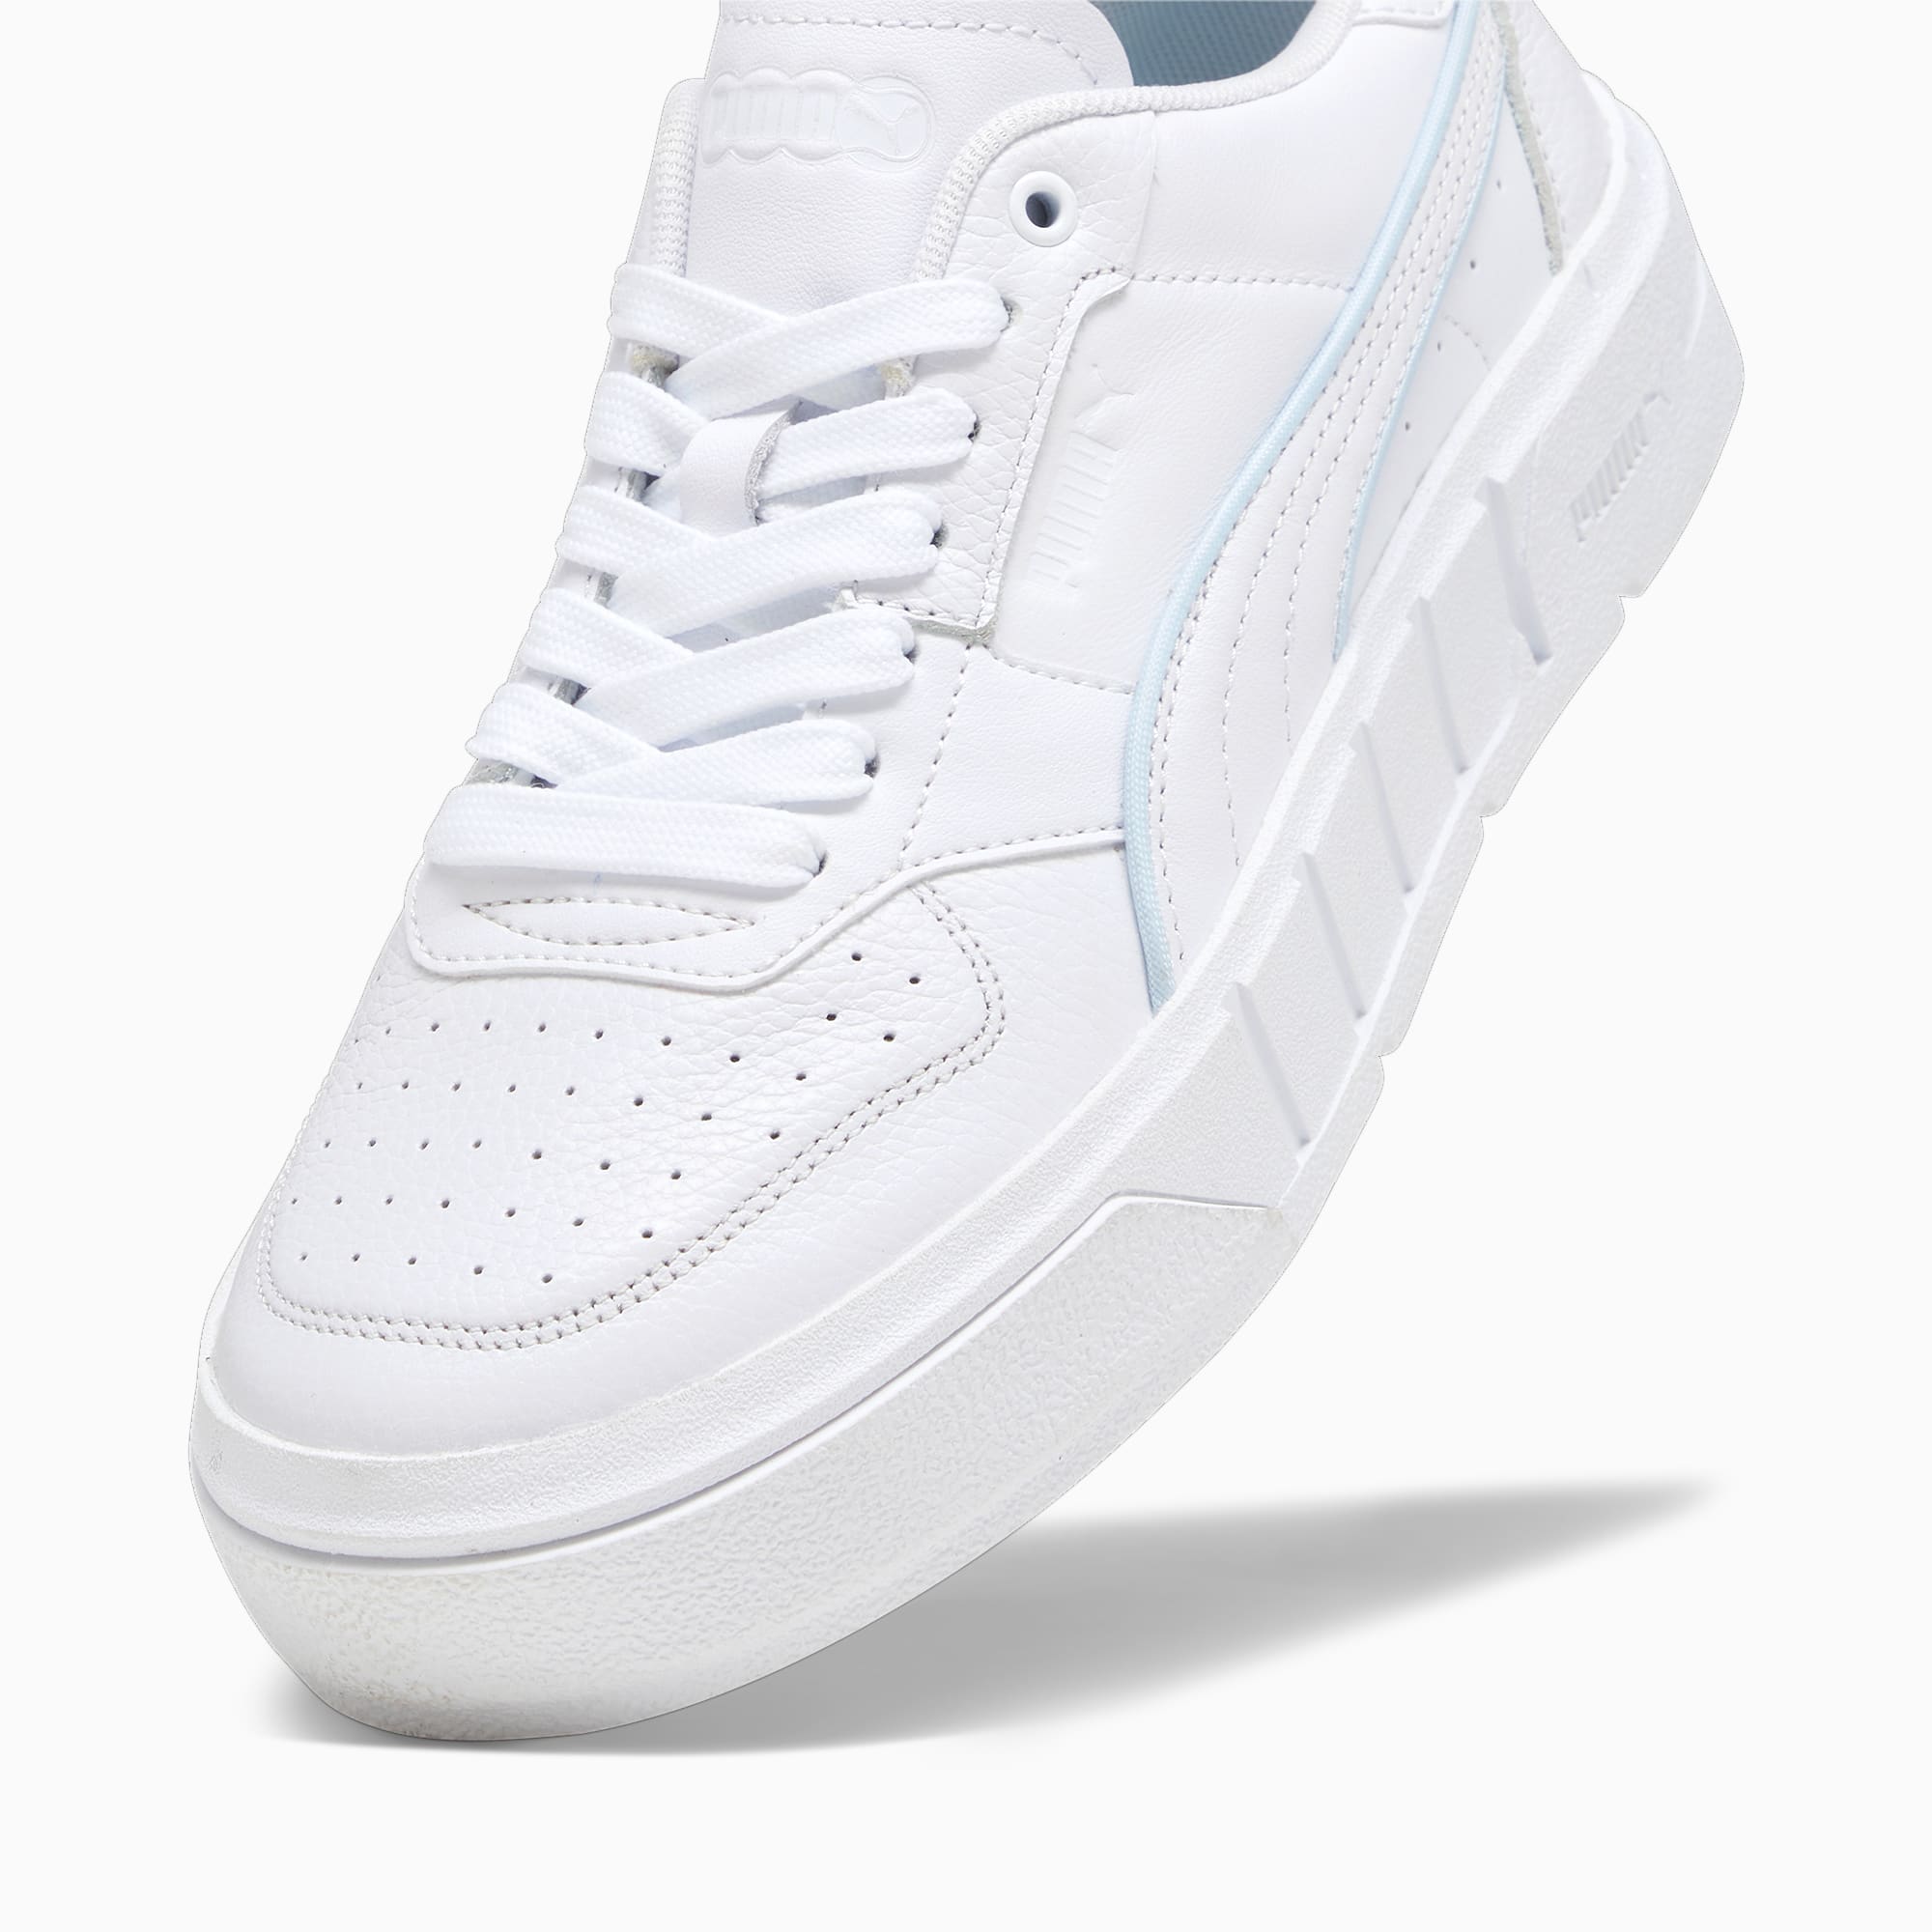 PUMA Cali Court Pop Women's Sneakers, White/Icy Blue